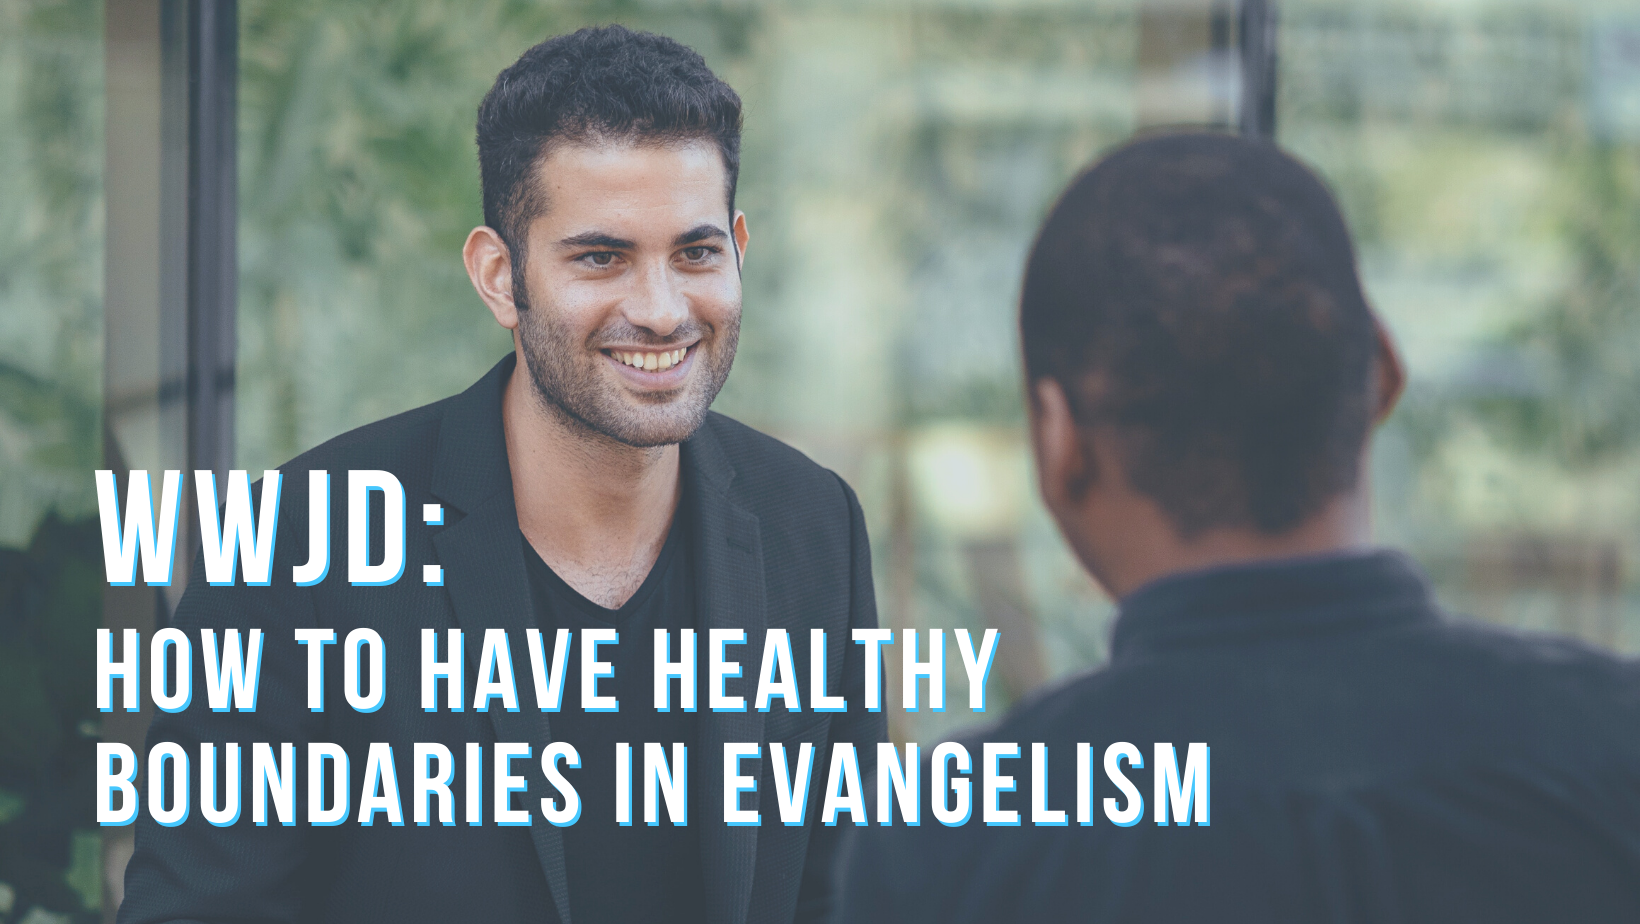 WWJD: How to have healthy boundaries in evangelism